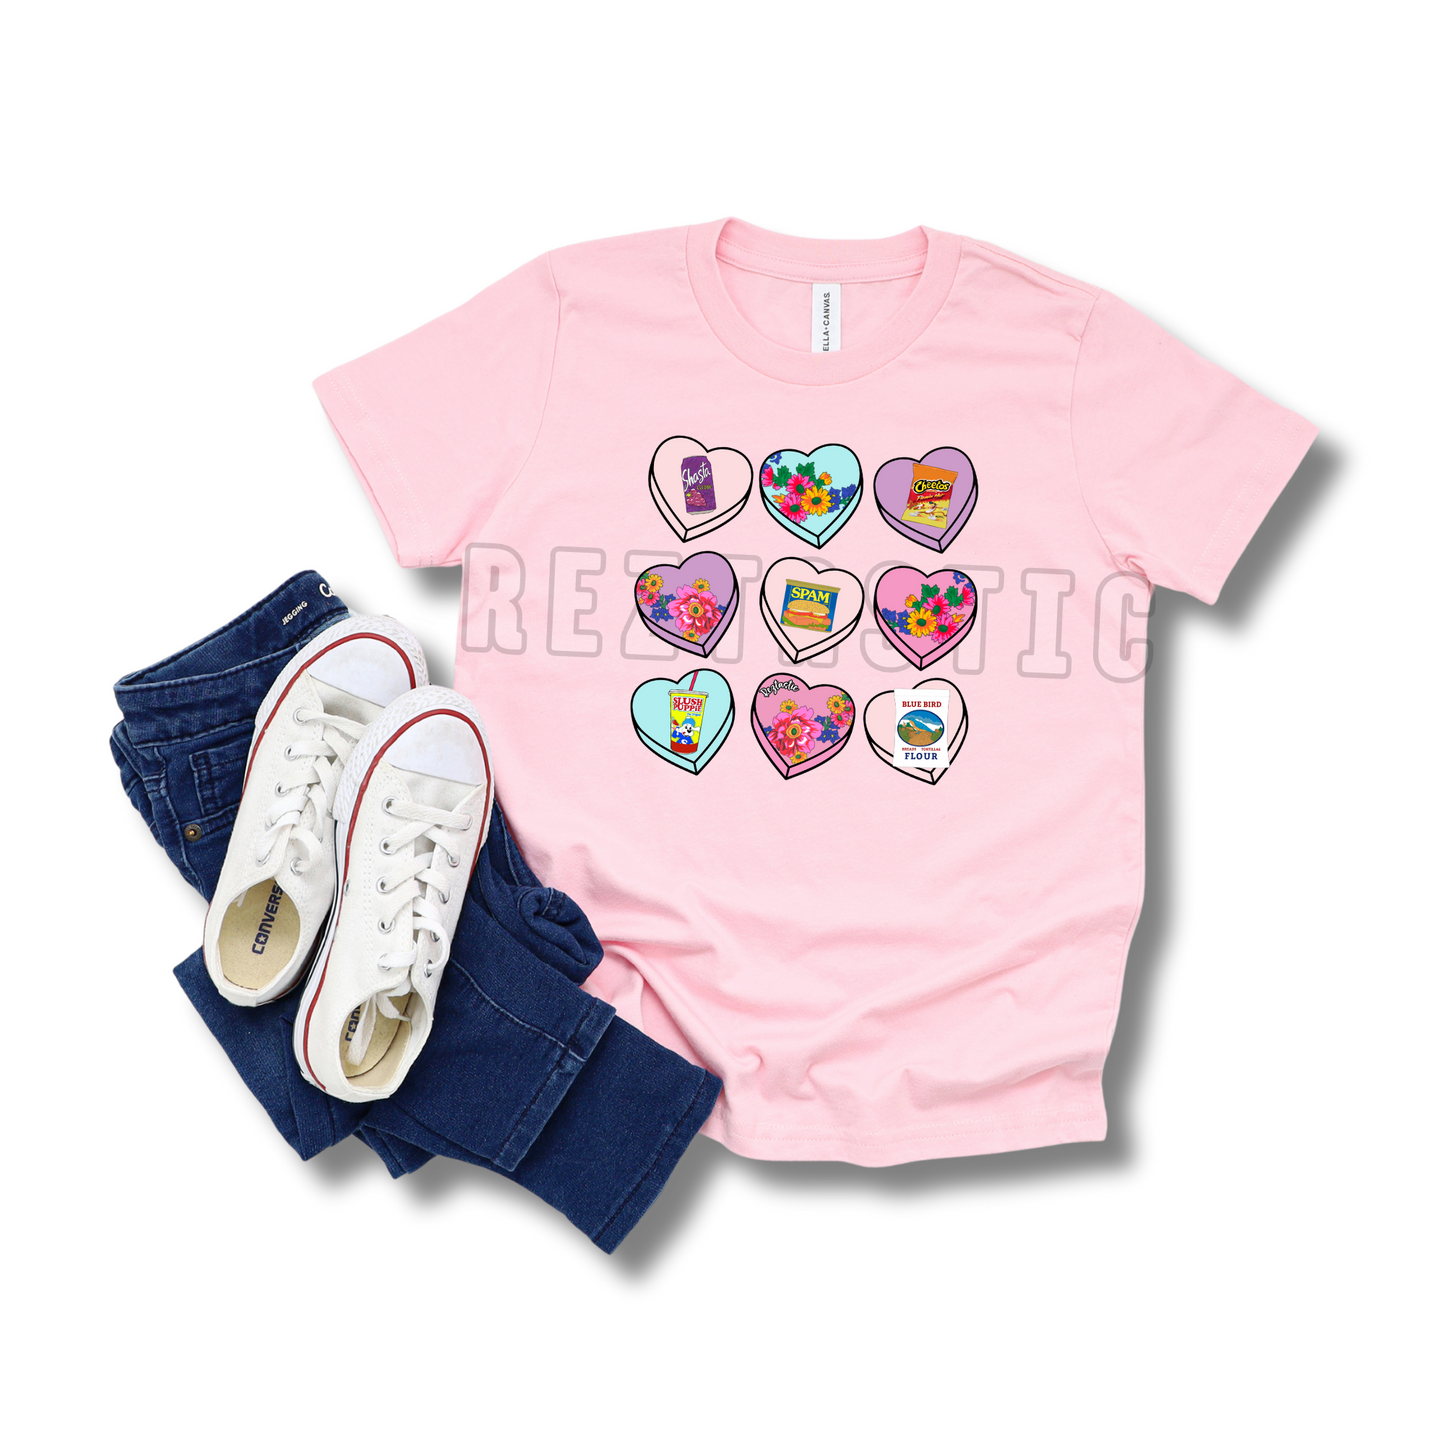 Rez Kid At Heart T-Shirt - Youth